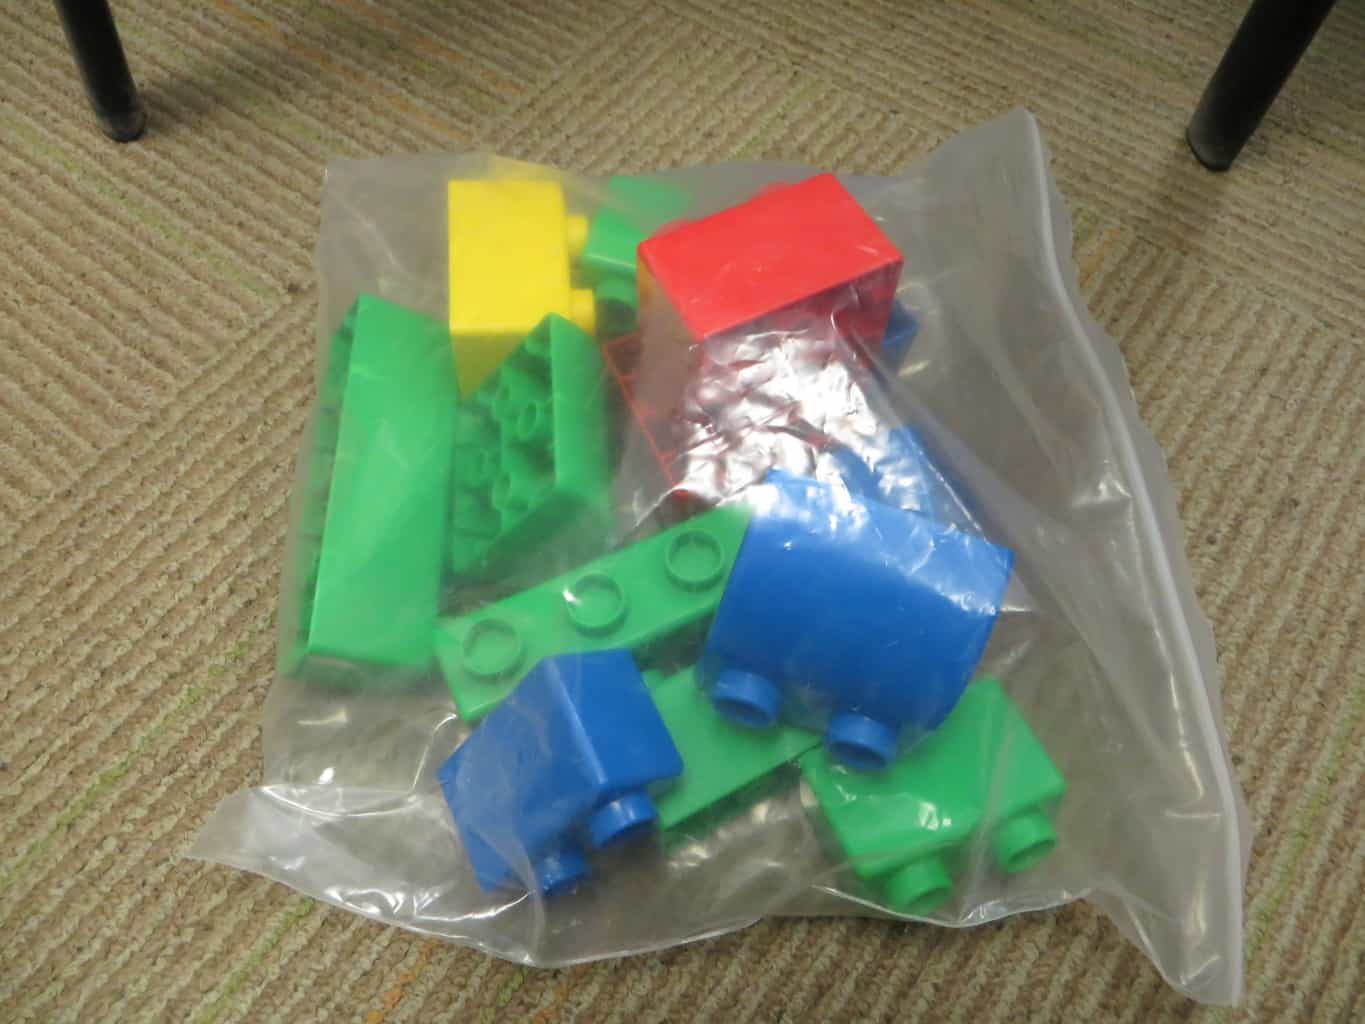 TOY : Blocks : Primary Colors (20-piece)